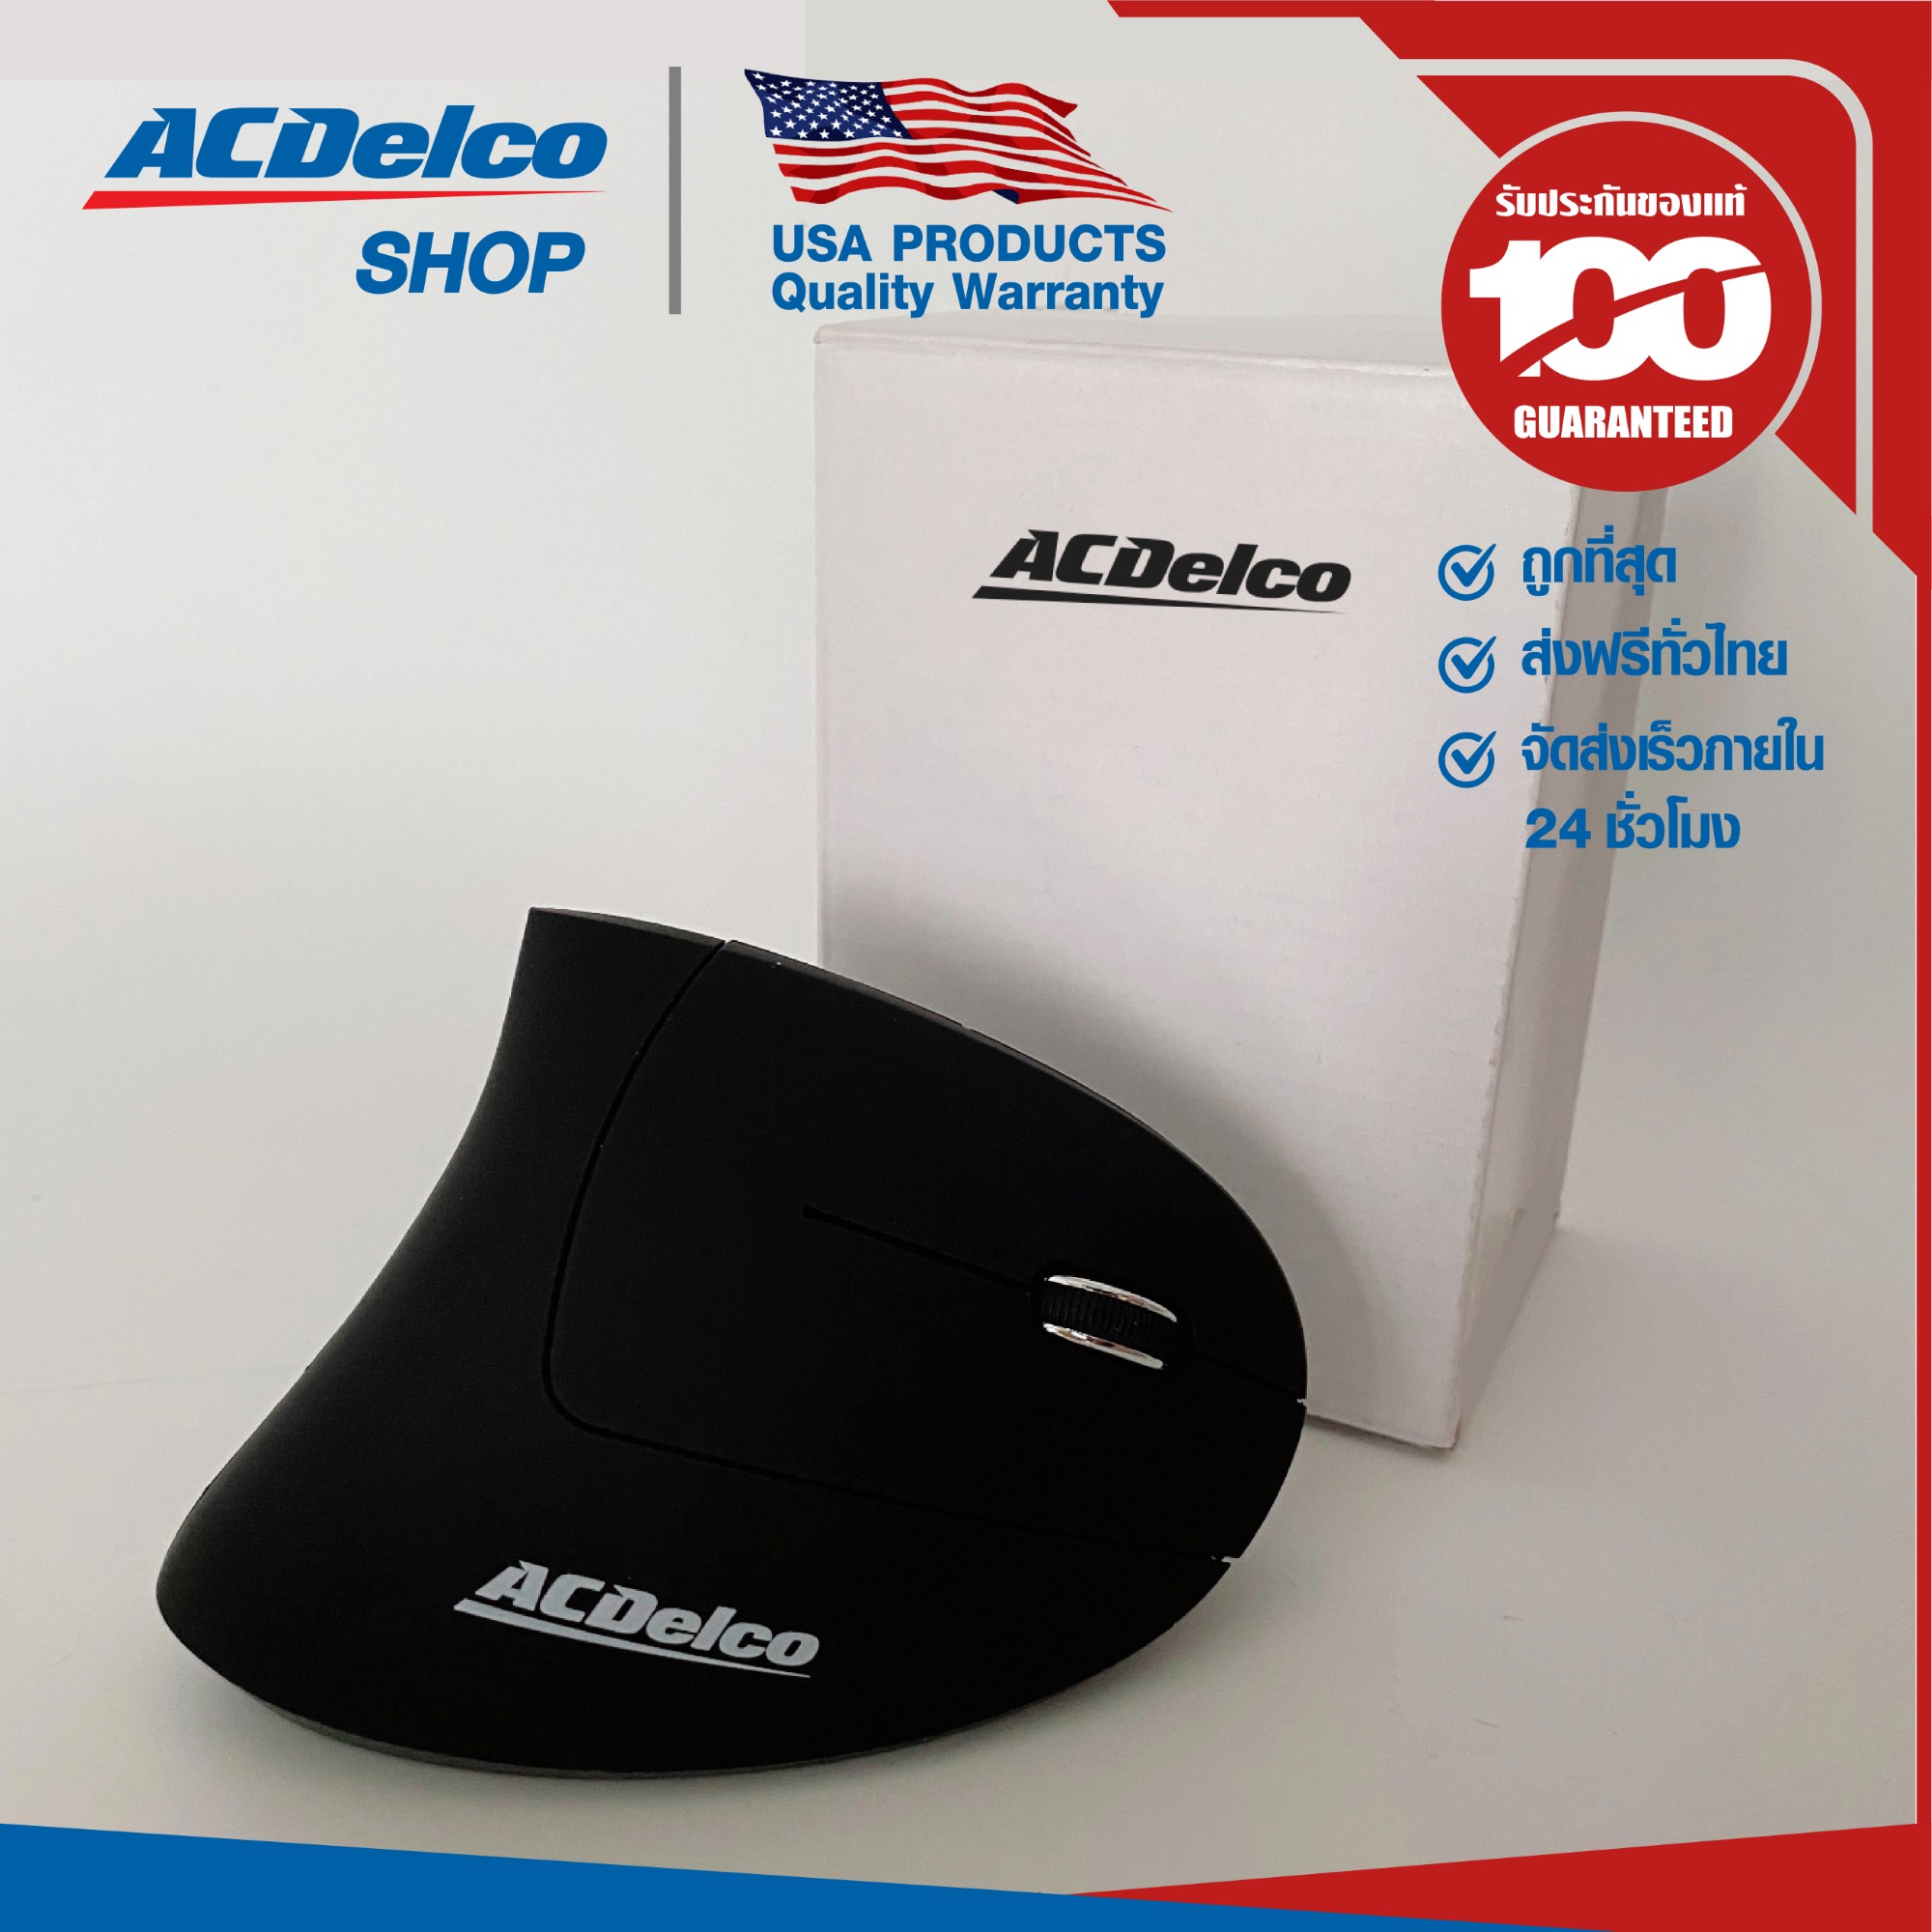 ACDelco Vertical Mouse เม้าส์ไร้สายเพื่อสุขภาพ ลดอาการปวดข้อมือ (สีดำ)